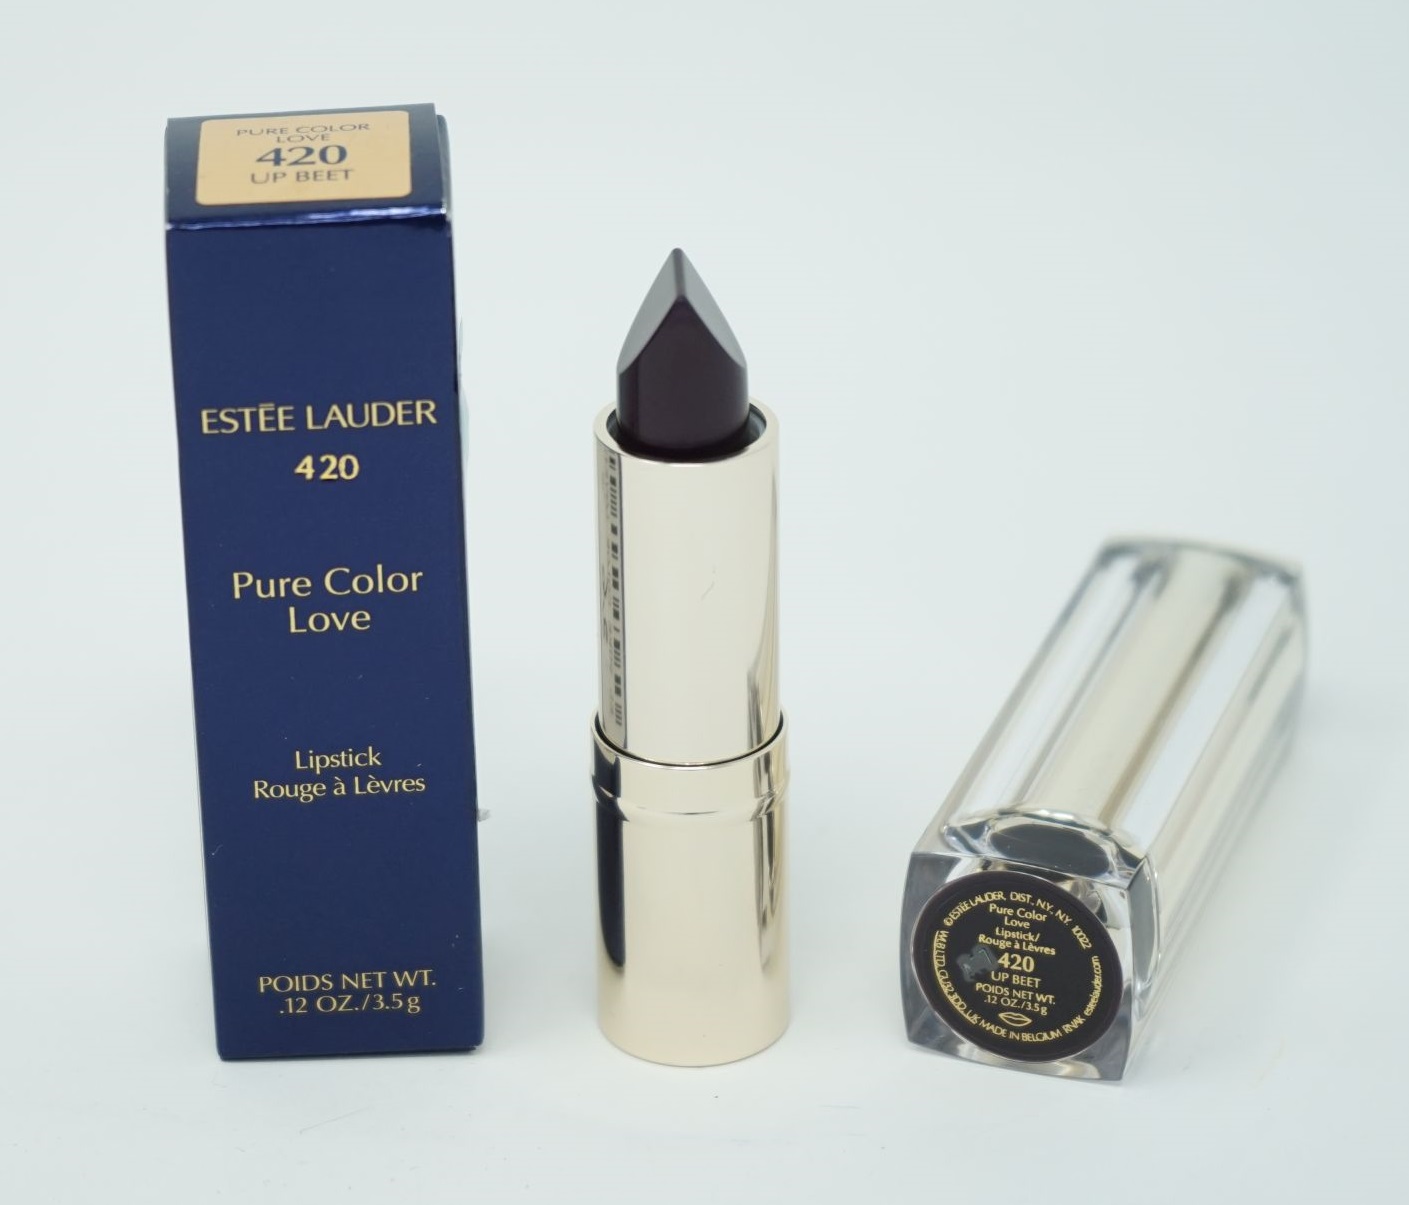 Estee Lauder Pure Color Love Lipstick 420 Up Beet